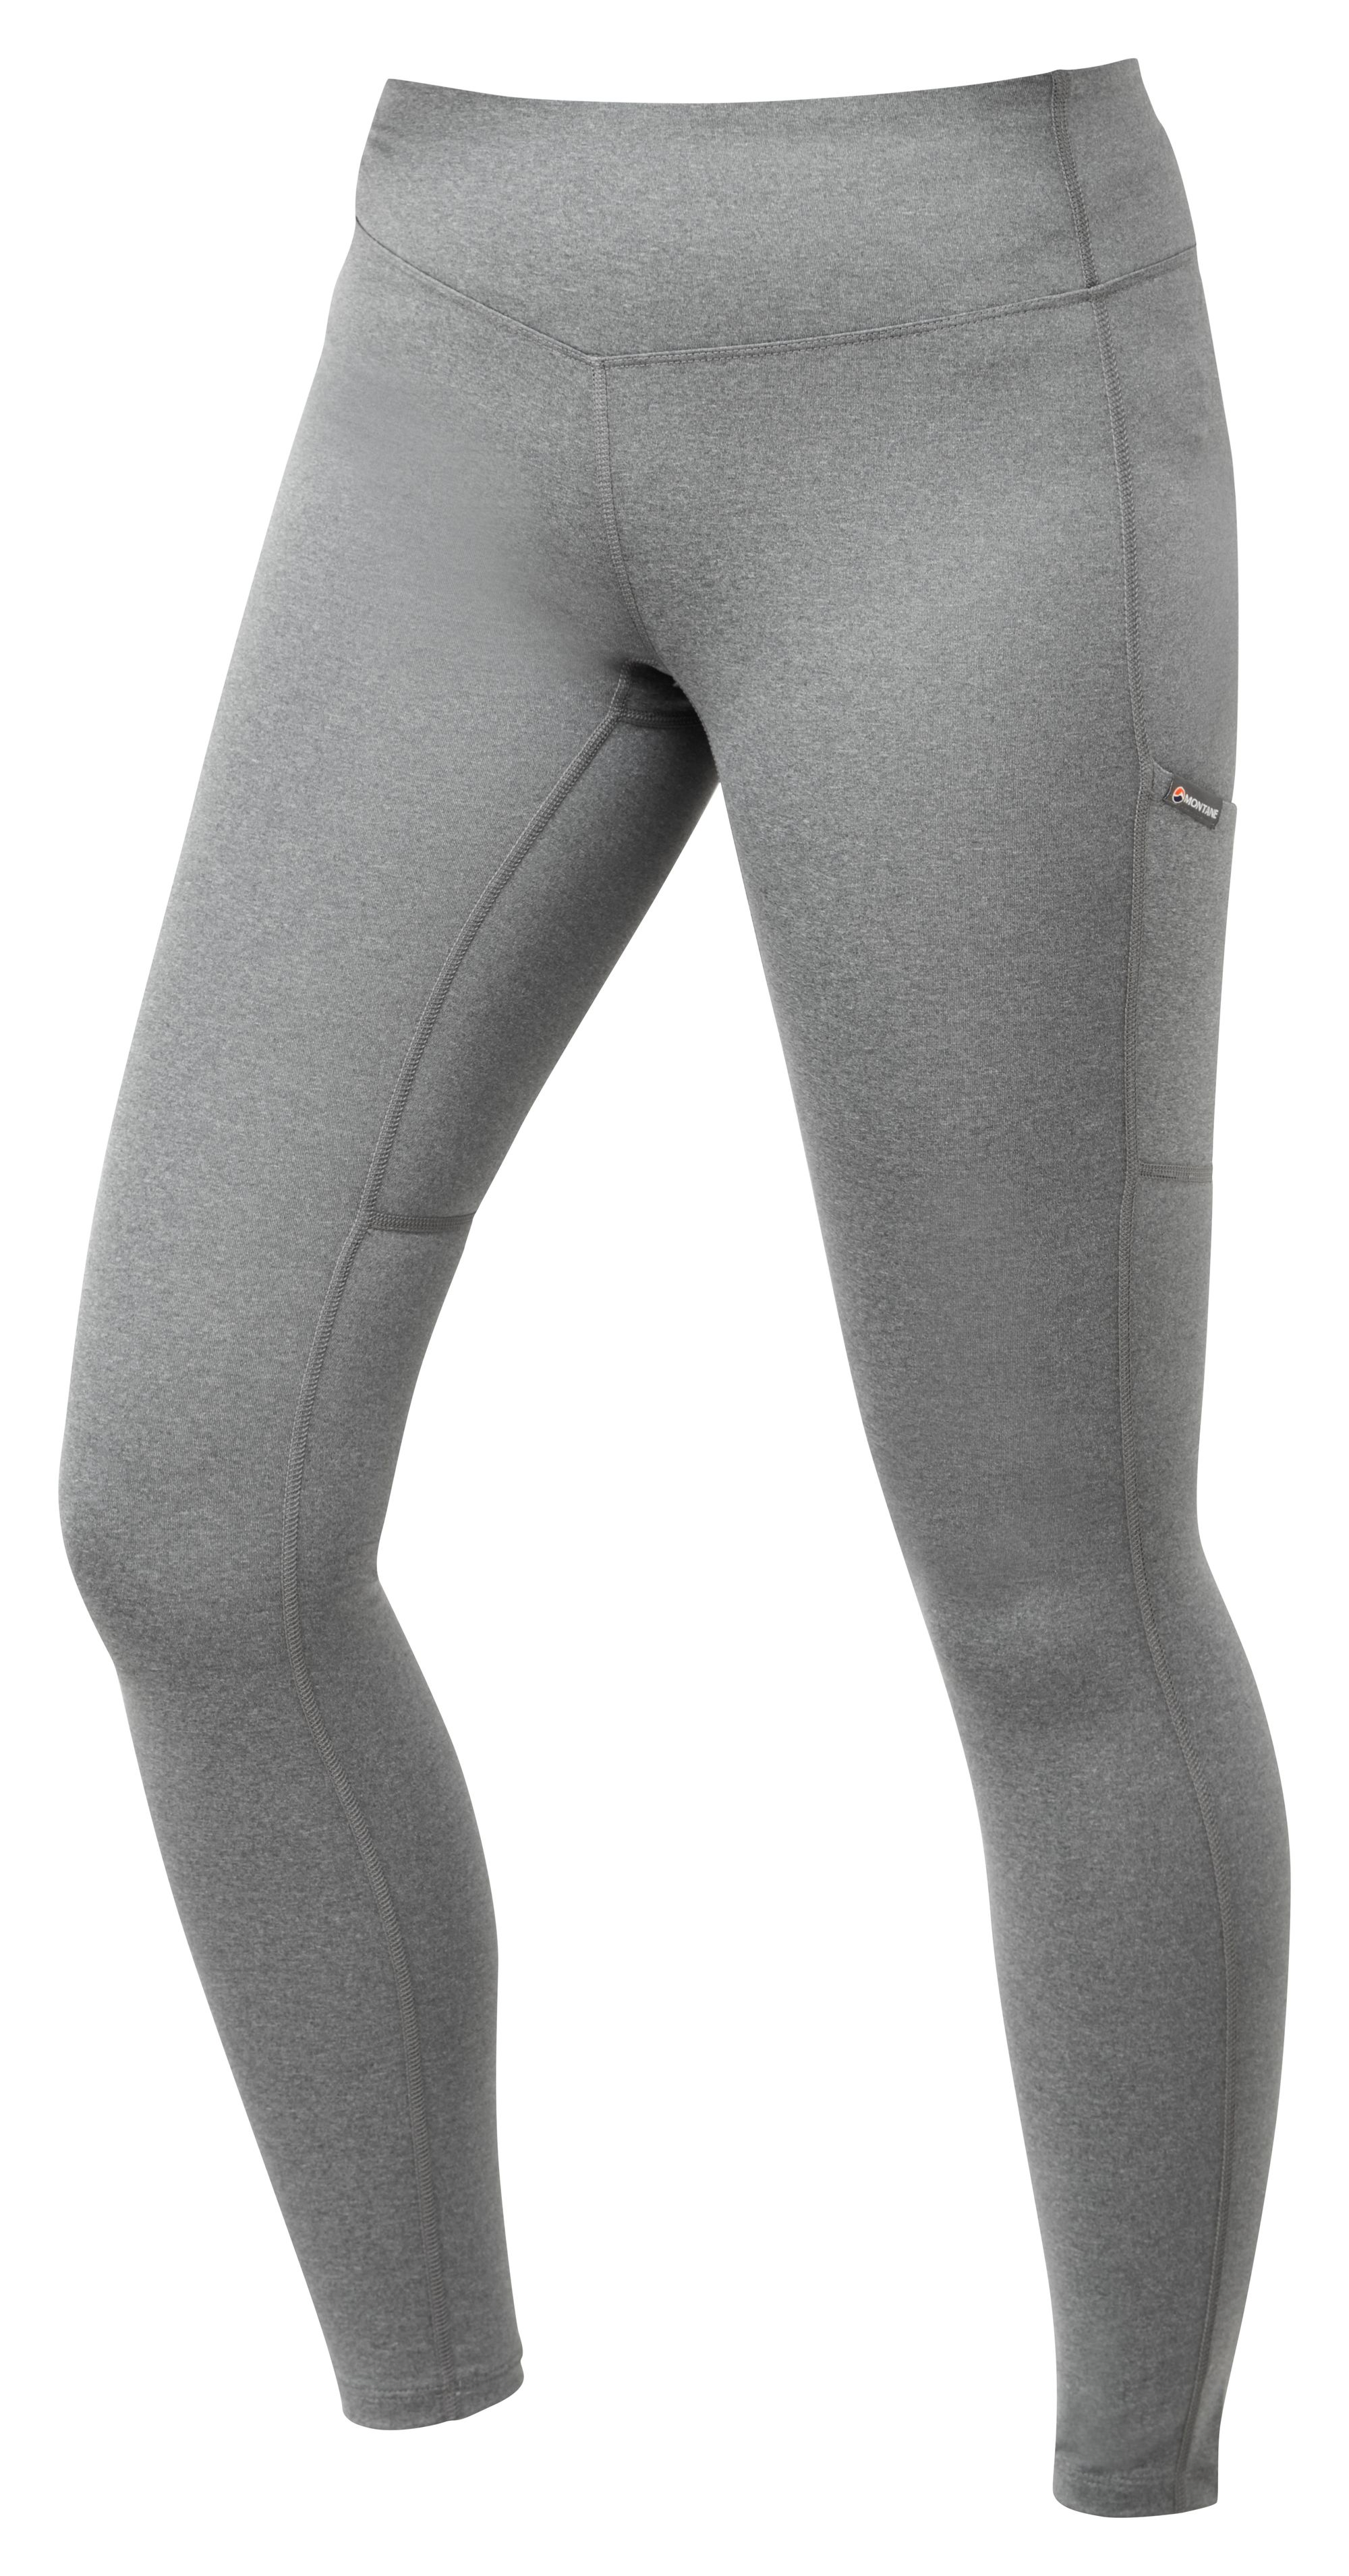 Montane FEM INEO LITE PANTS-REG LEG-GREY MARL-UK8/XS dámské kalhoty šedé